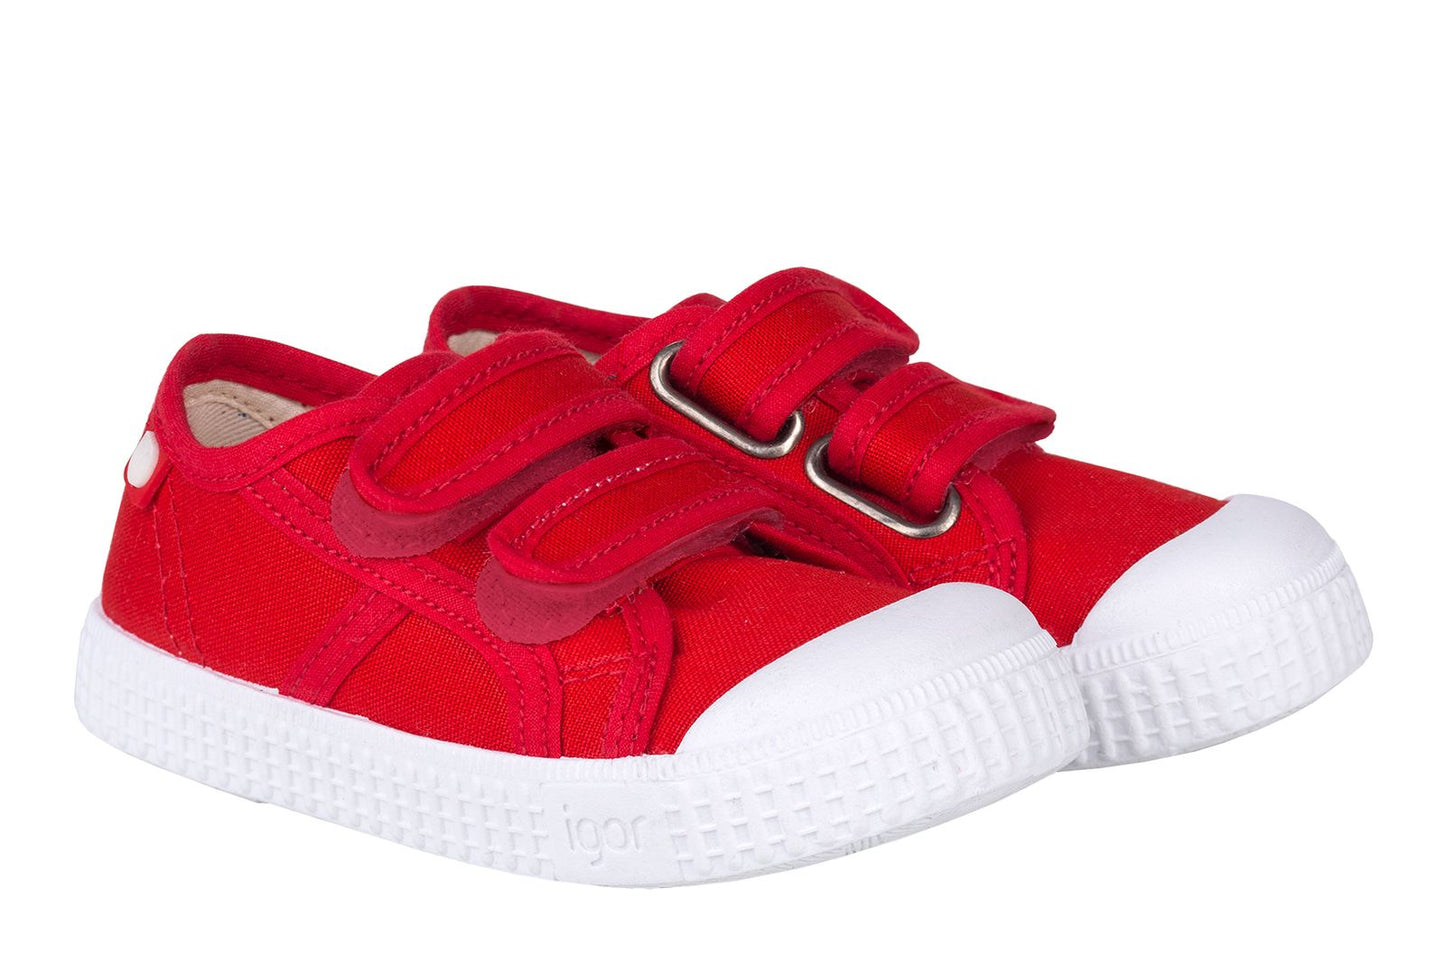 Igor S10199 Boy's & Girl's Berri Velcro Shoes - Rojo